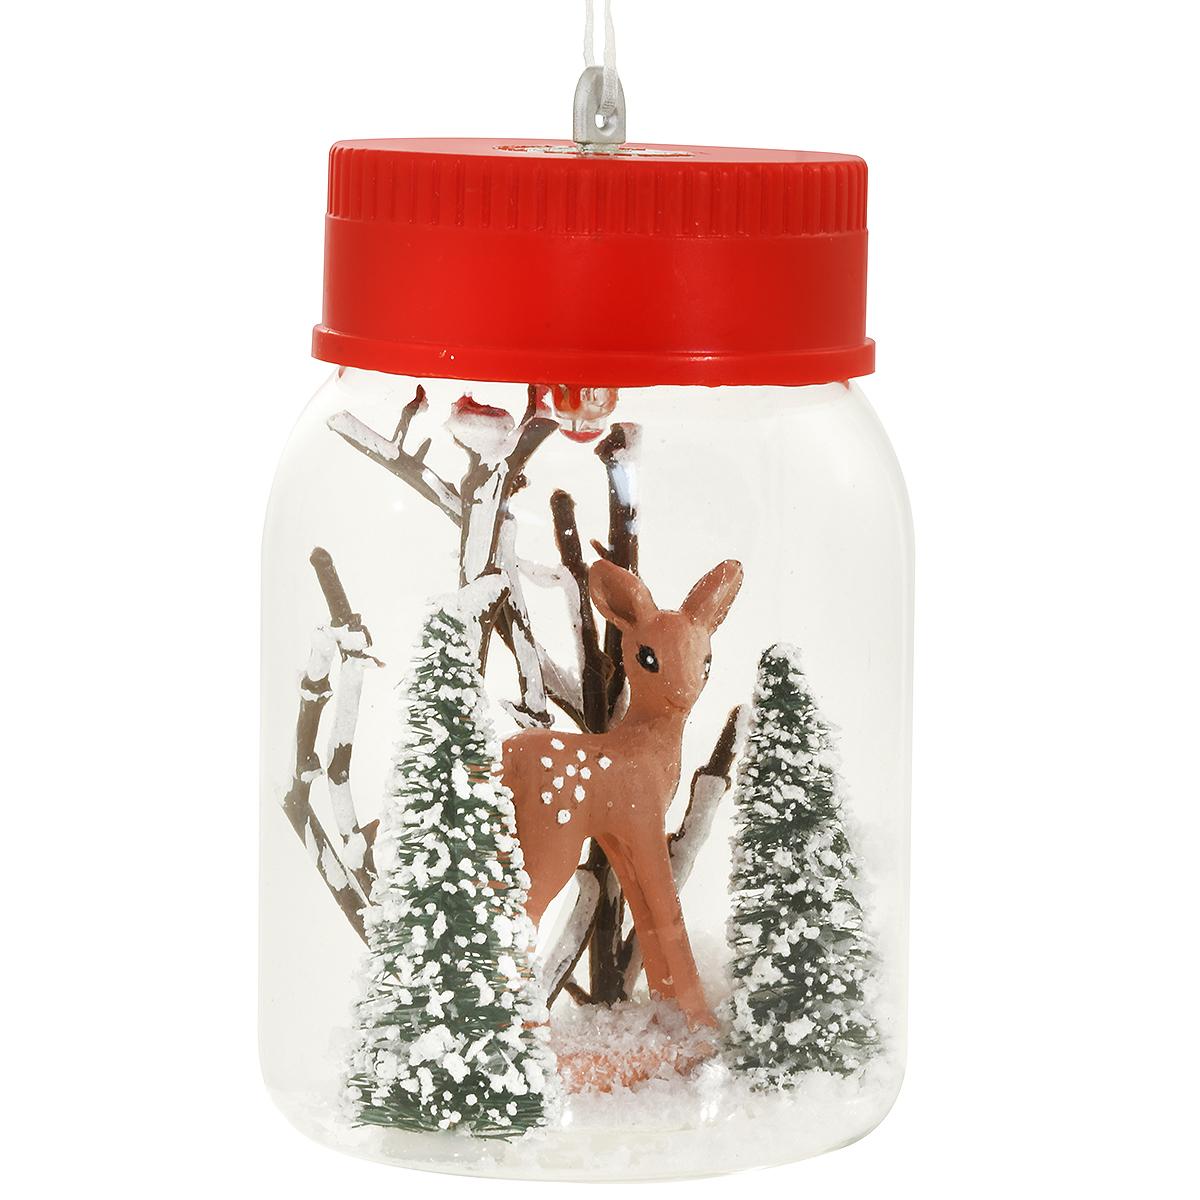 Deer In Jar “Snow Globe” Ornament